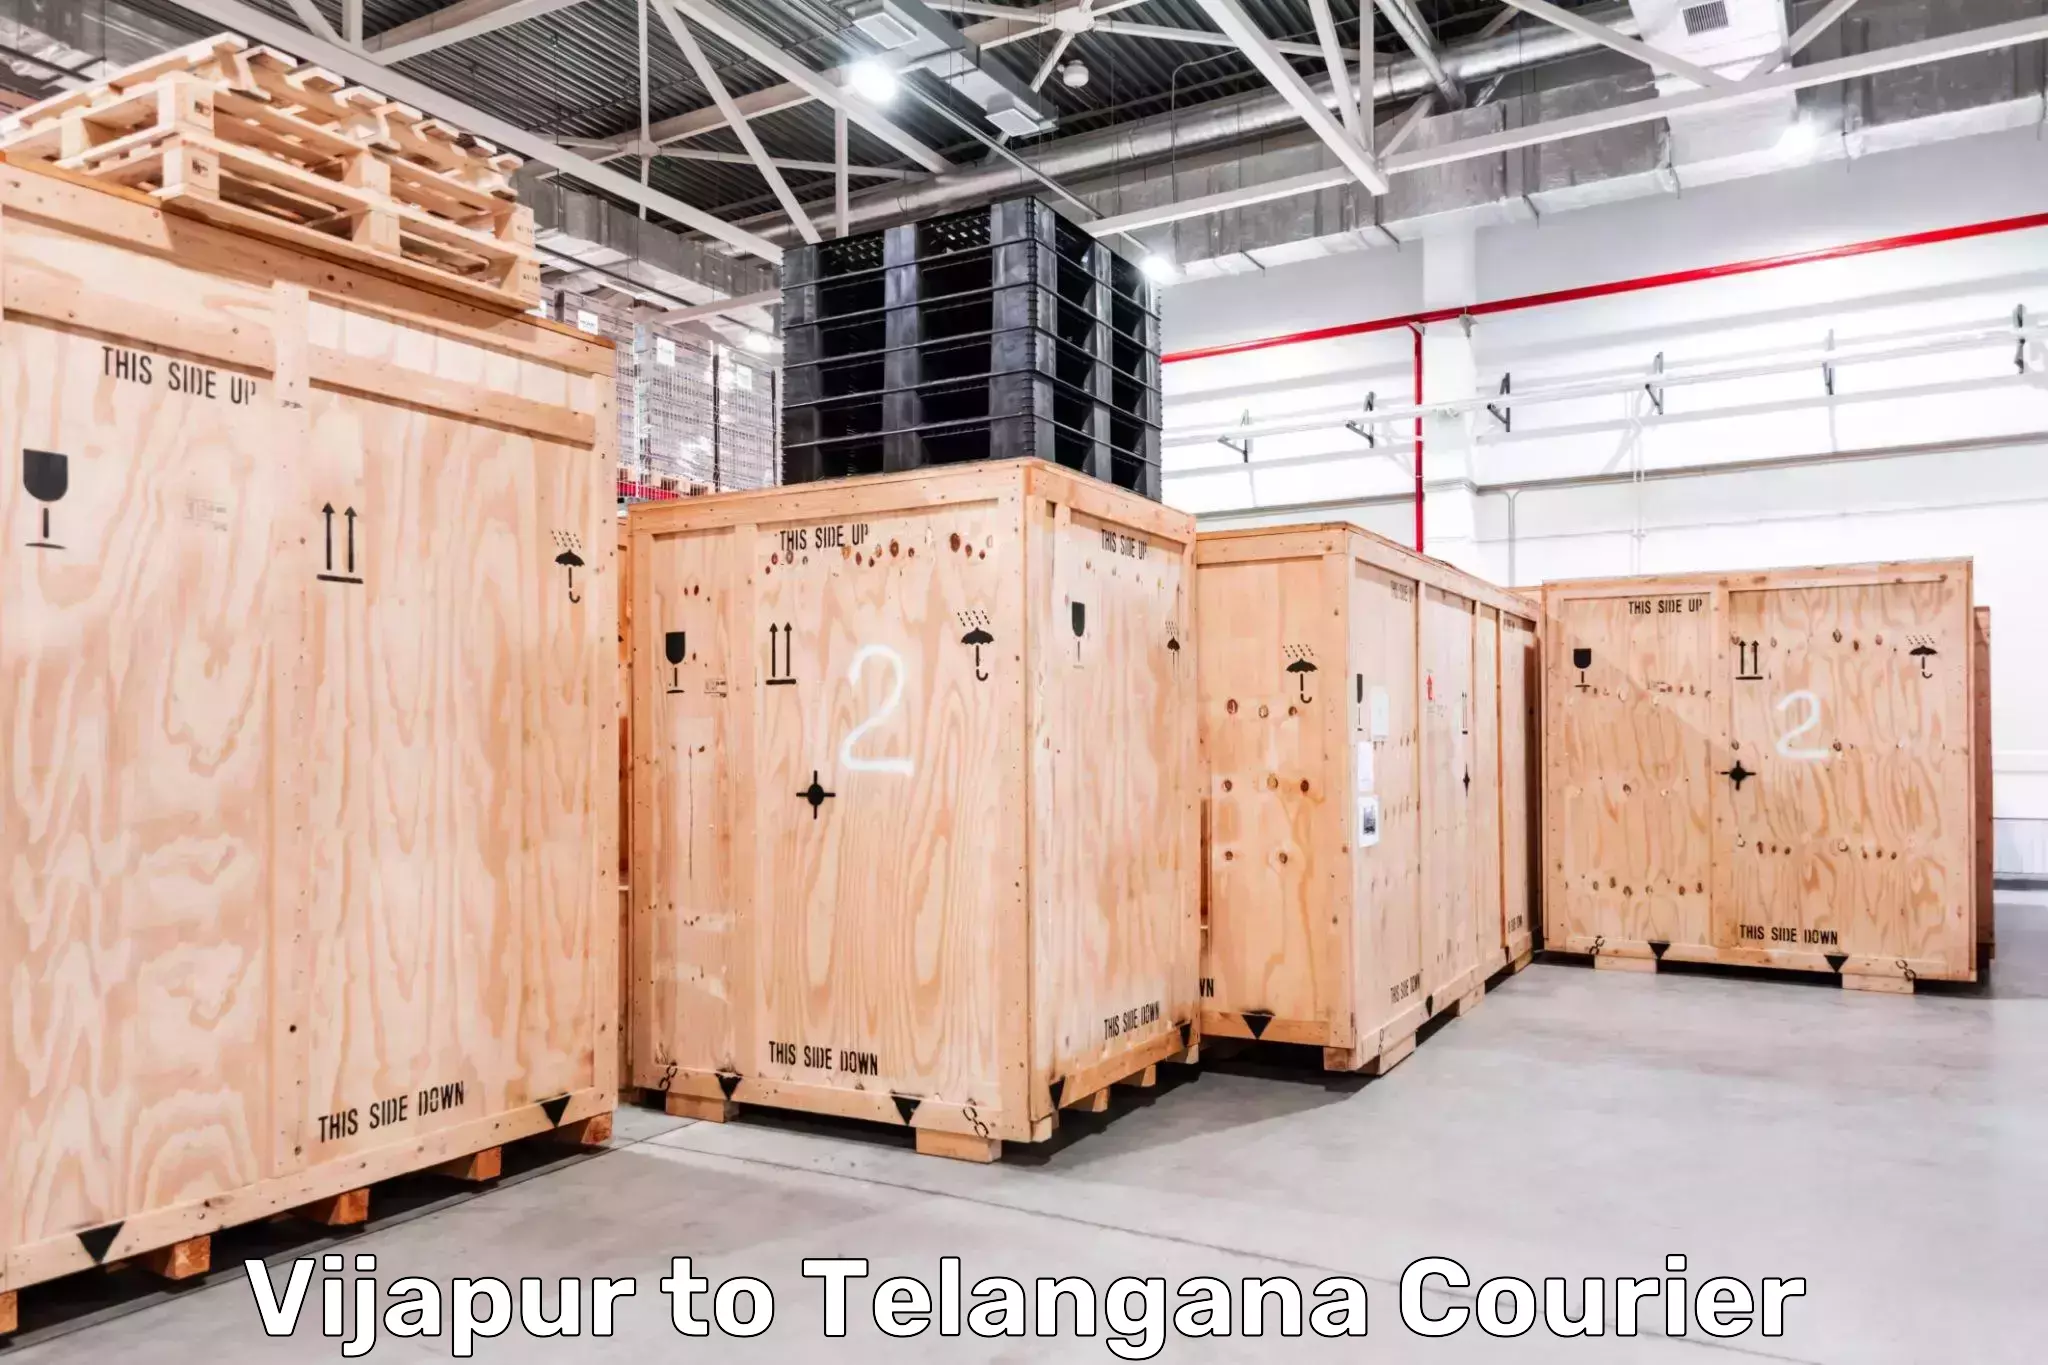 Global courier networks Vijapur to Telangana